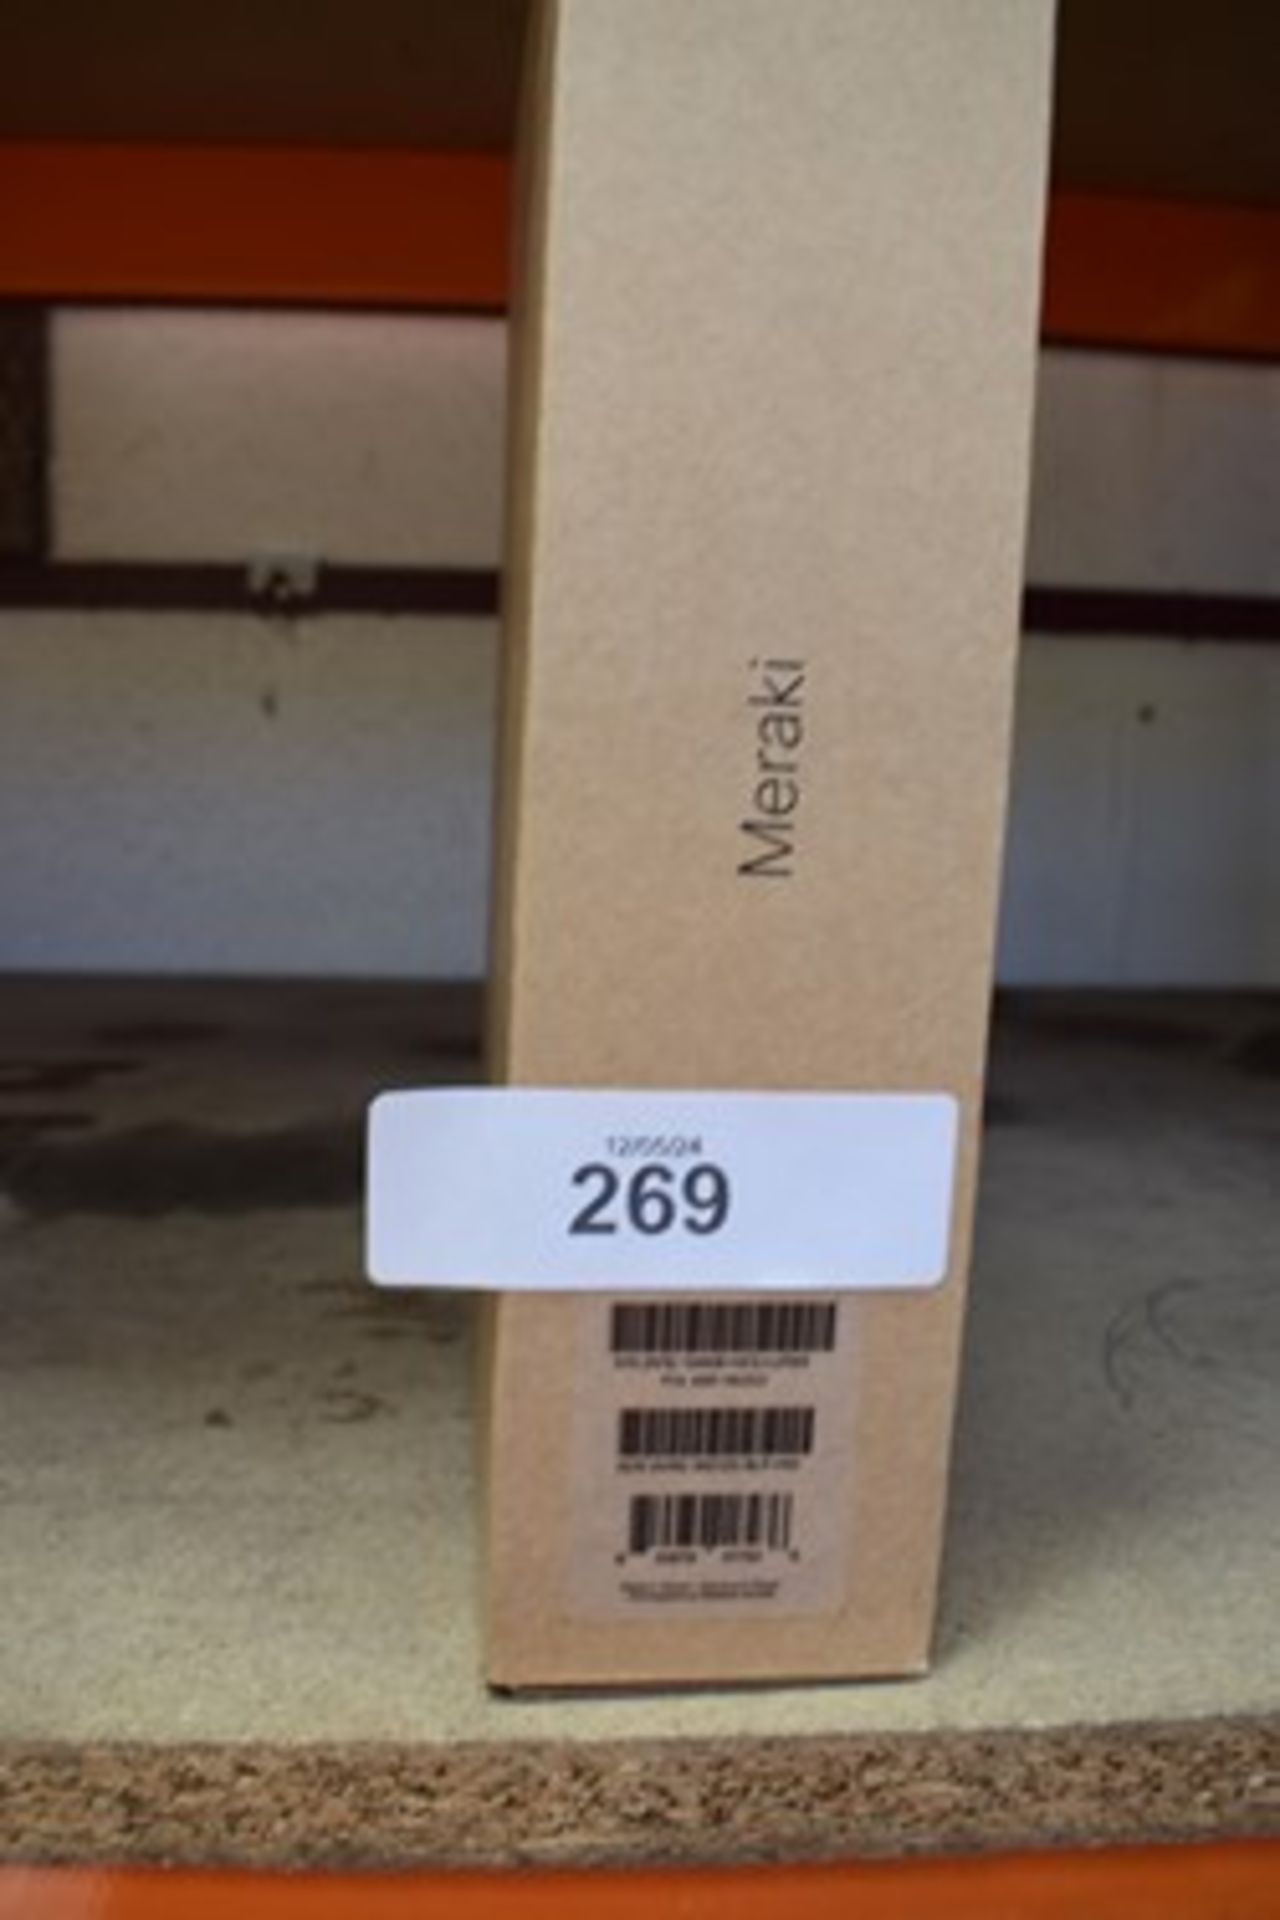 1 x Cisco Meraki, MS120-8LP unit, product No: A90-16200 - sealed new in box (C18) - Image 2 of 2